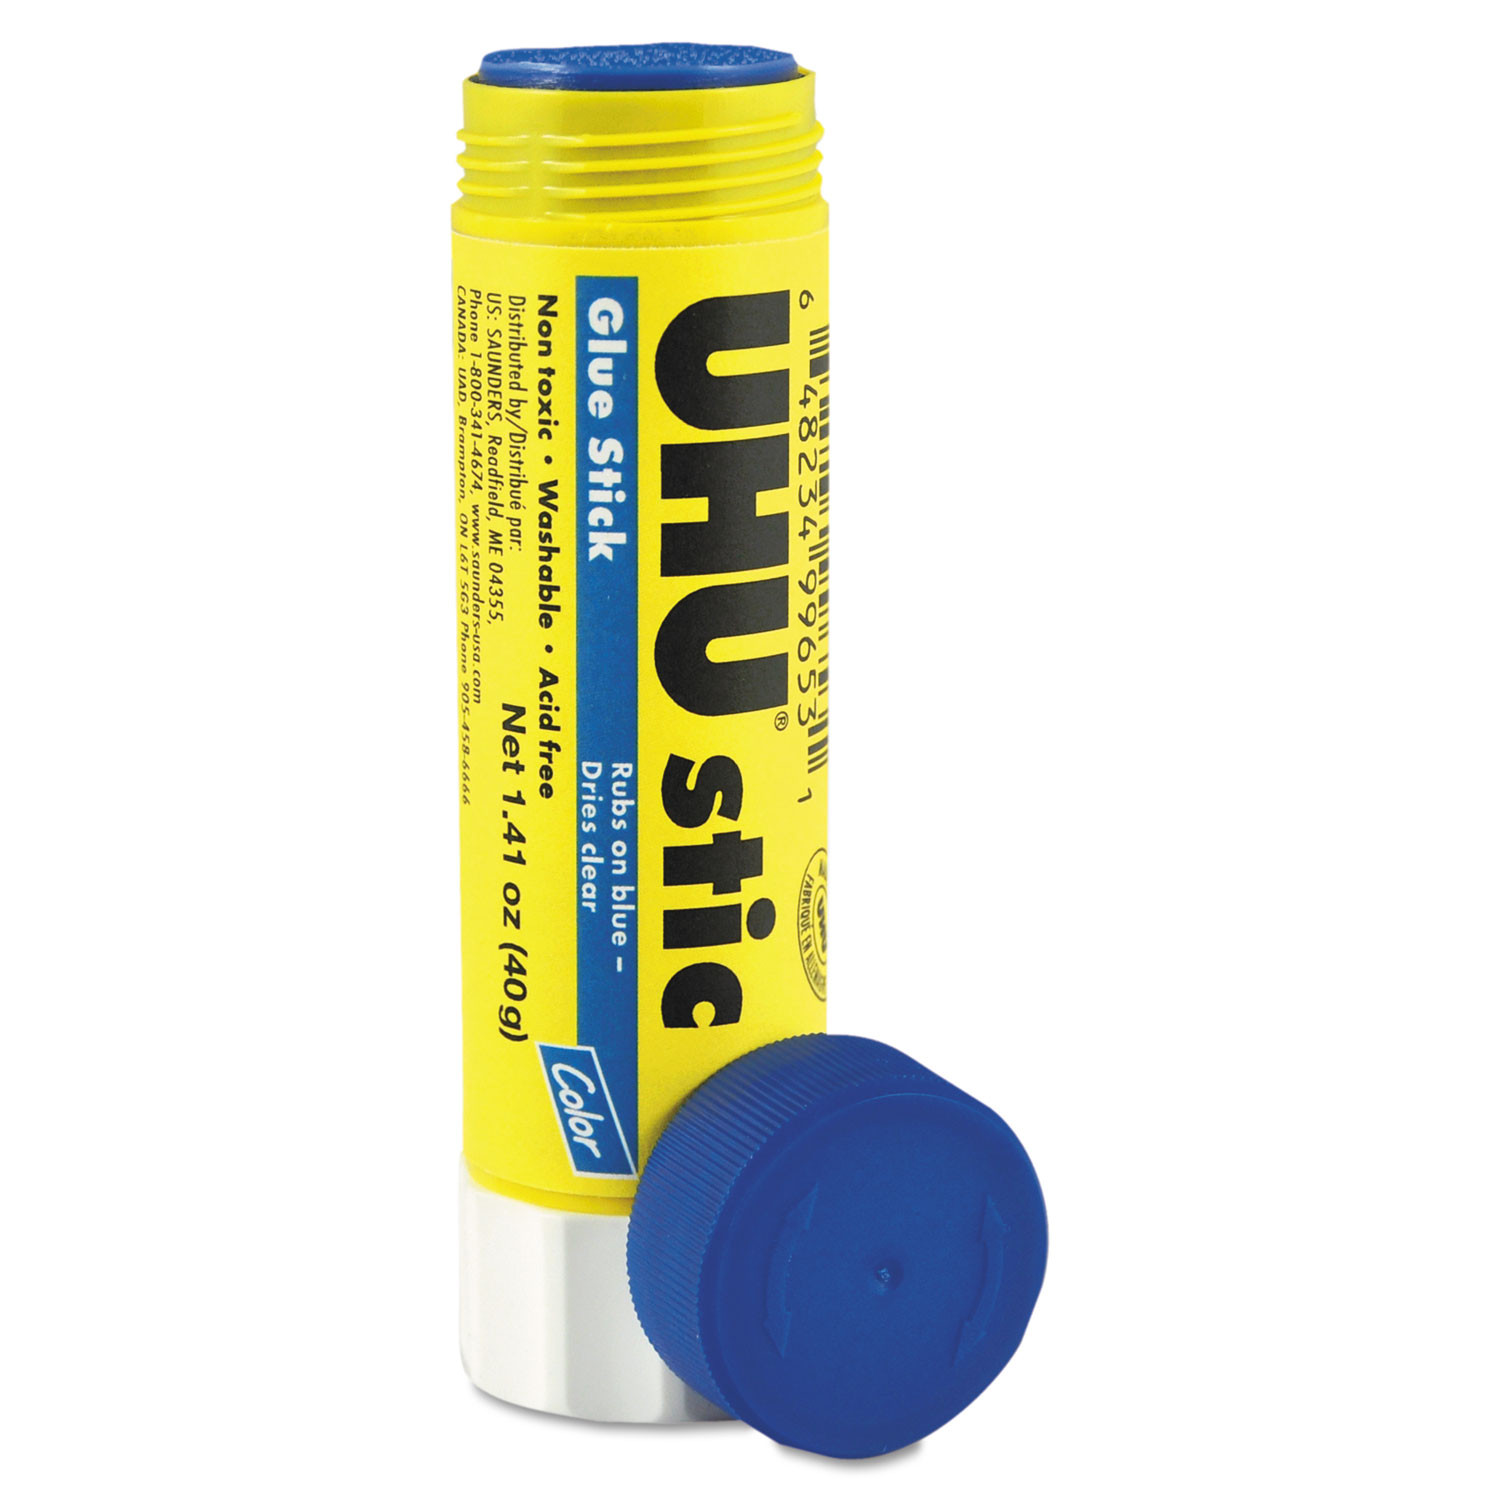 Uhu Stic Permanent Glue Stick, 1.41 Oz, Applies Blue, Dries Clear